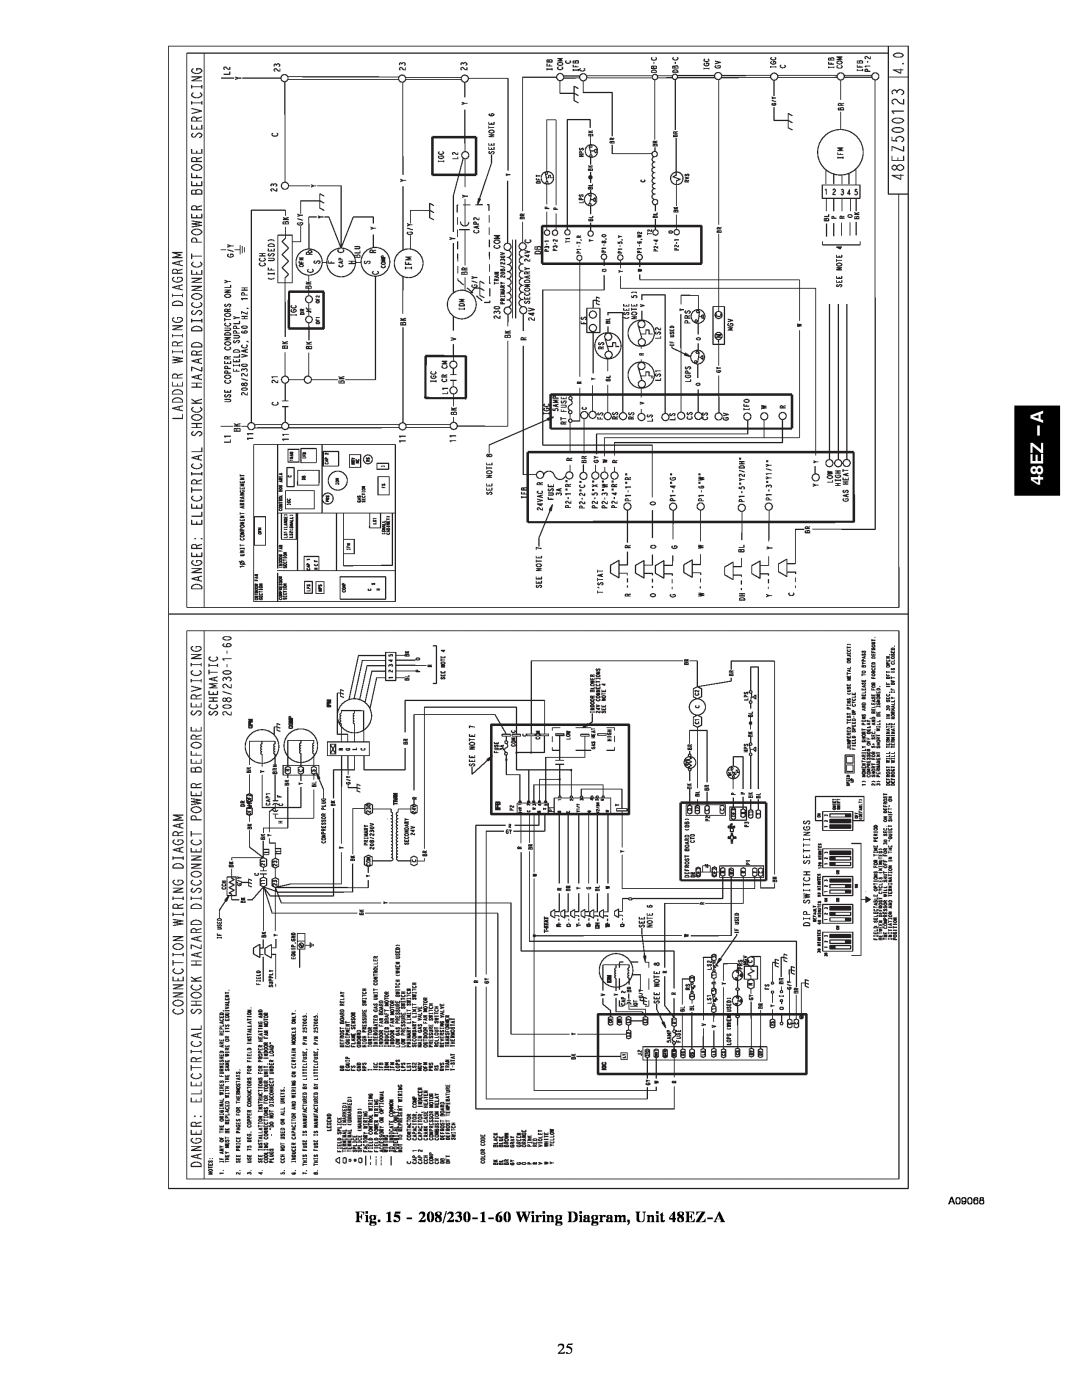 Carrier installation instructions 48EZ A, 208/230-1-60Wiring Diagram, Unit 48EZ-A 